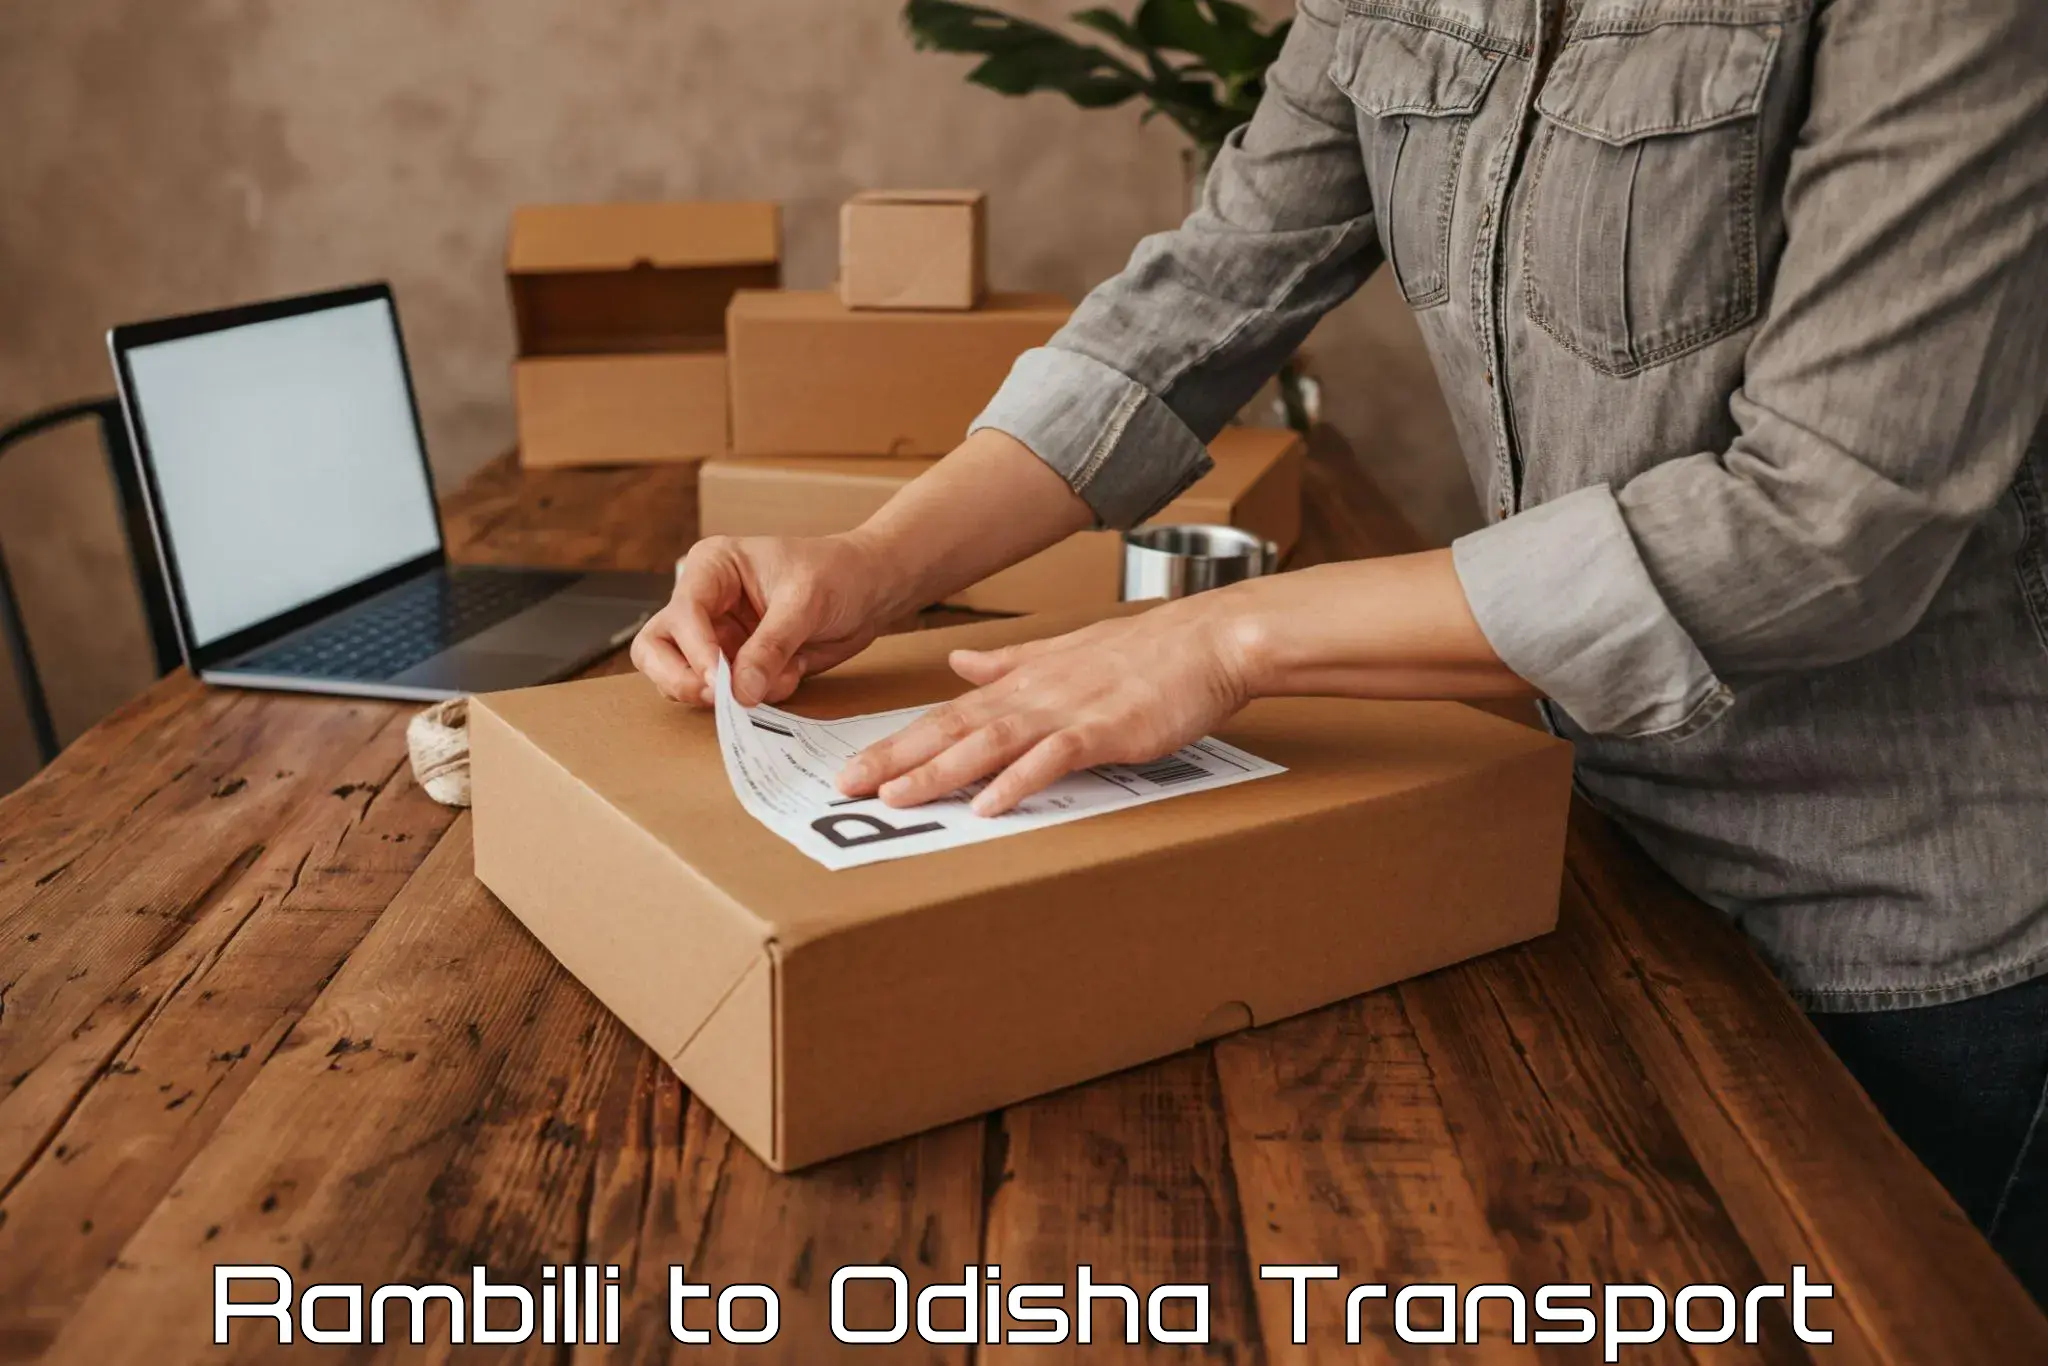 Online transport service Rambilli to Rourkela